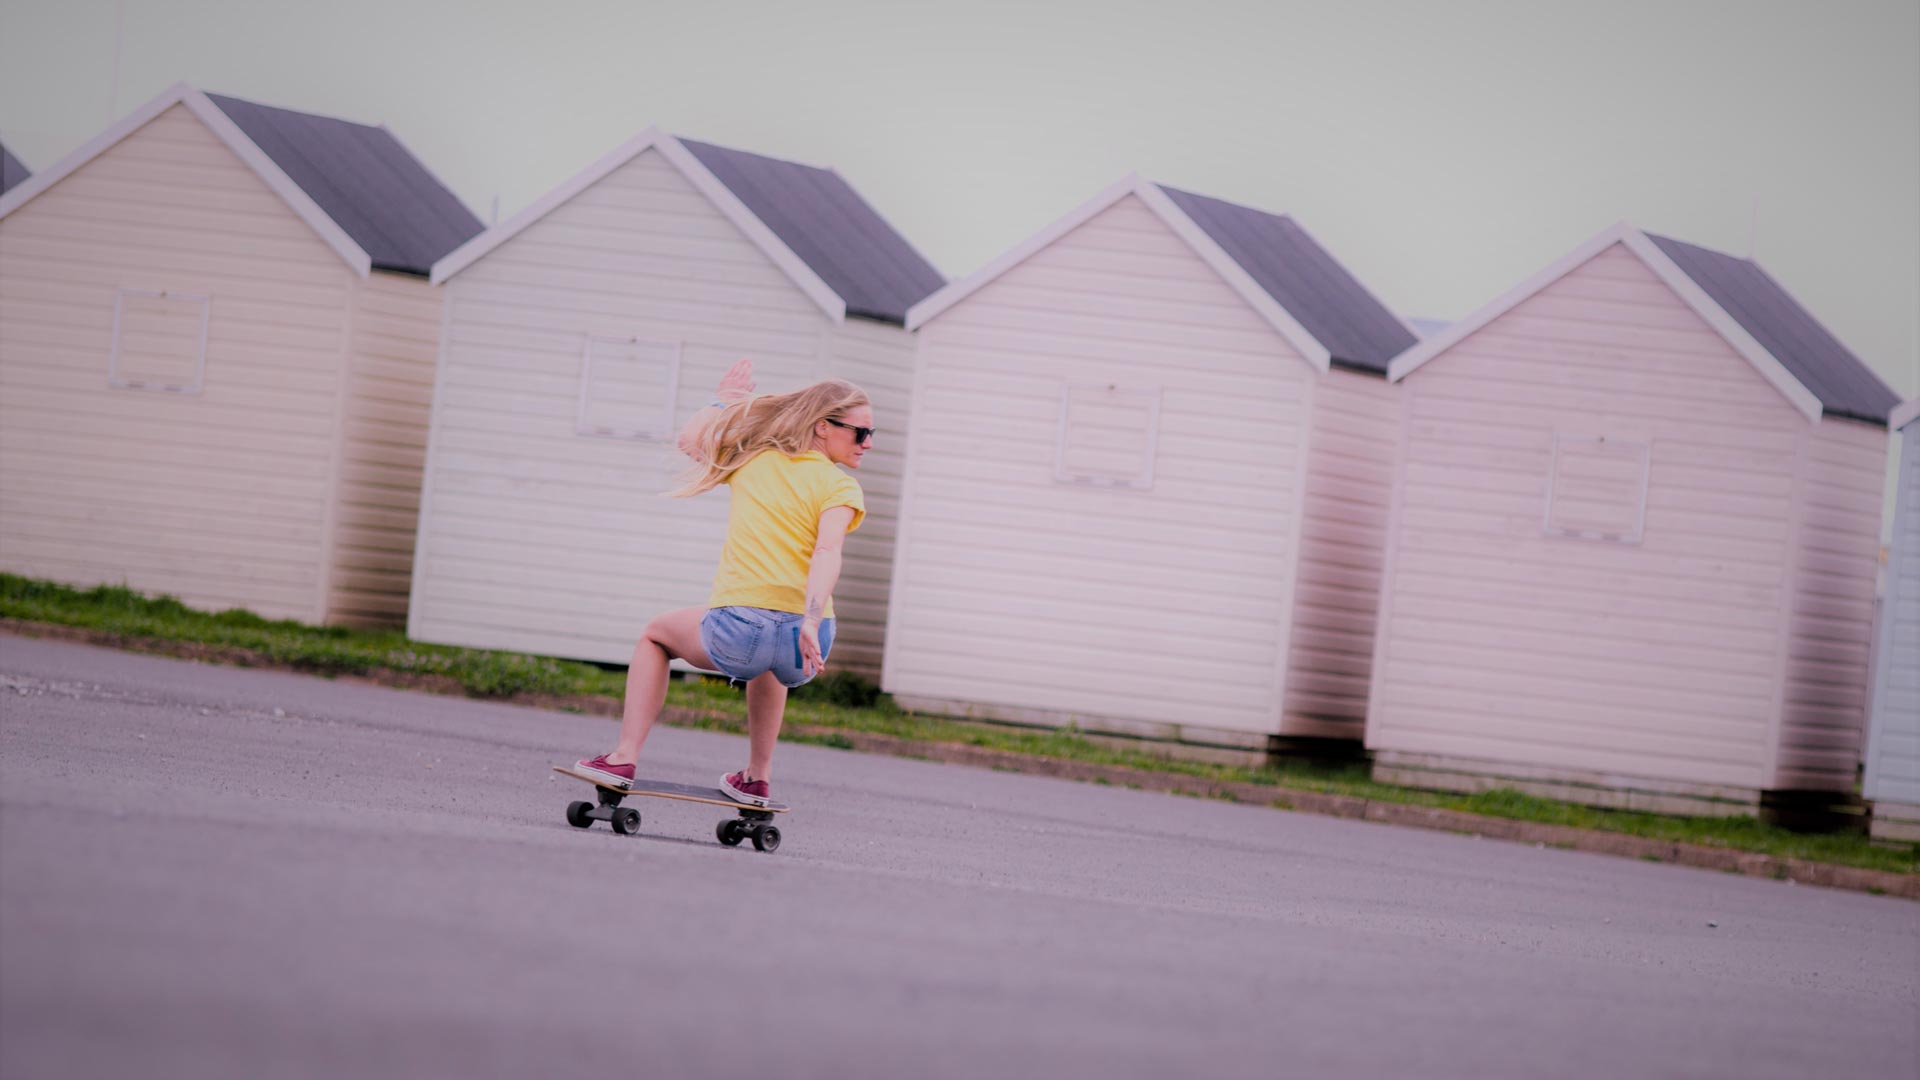 Stella Grace skilfully using a skateboard 